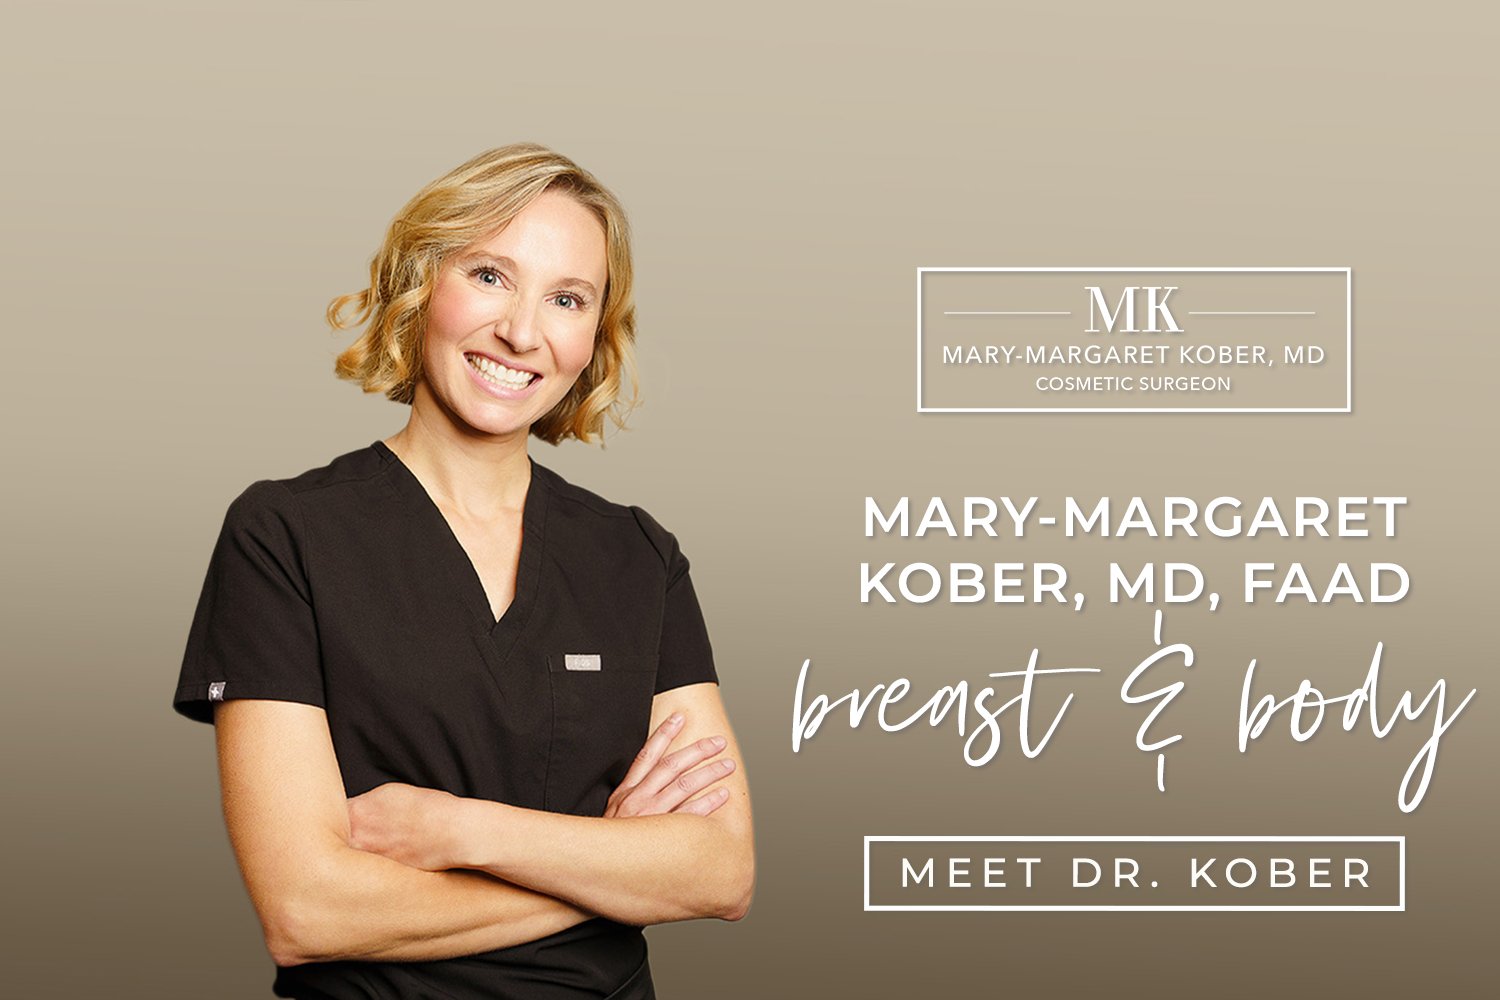 Mary-Margaret Kober, MD